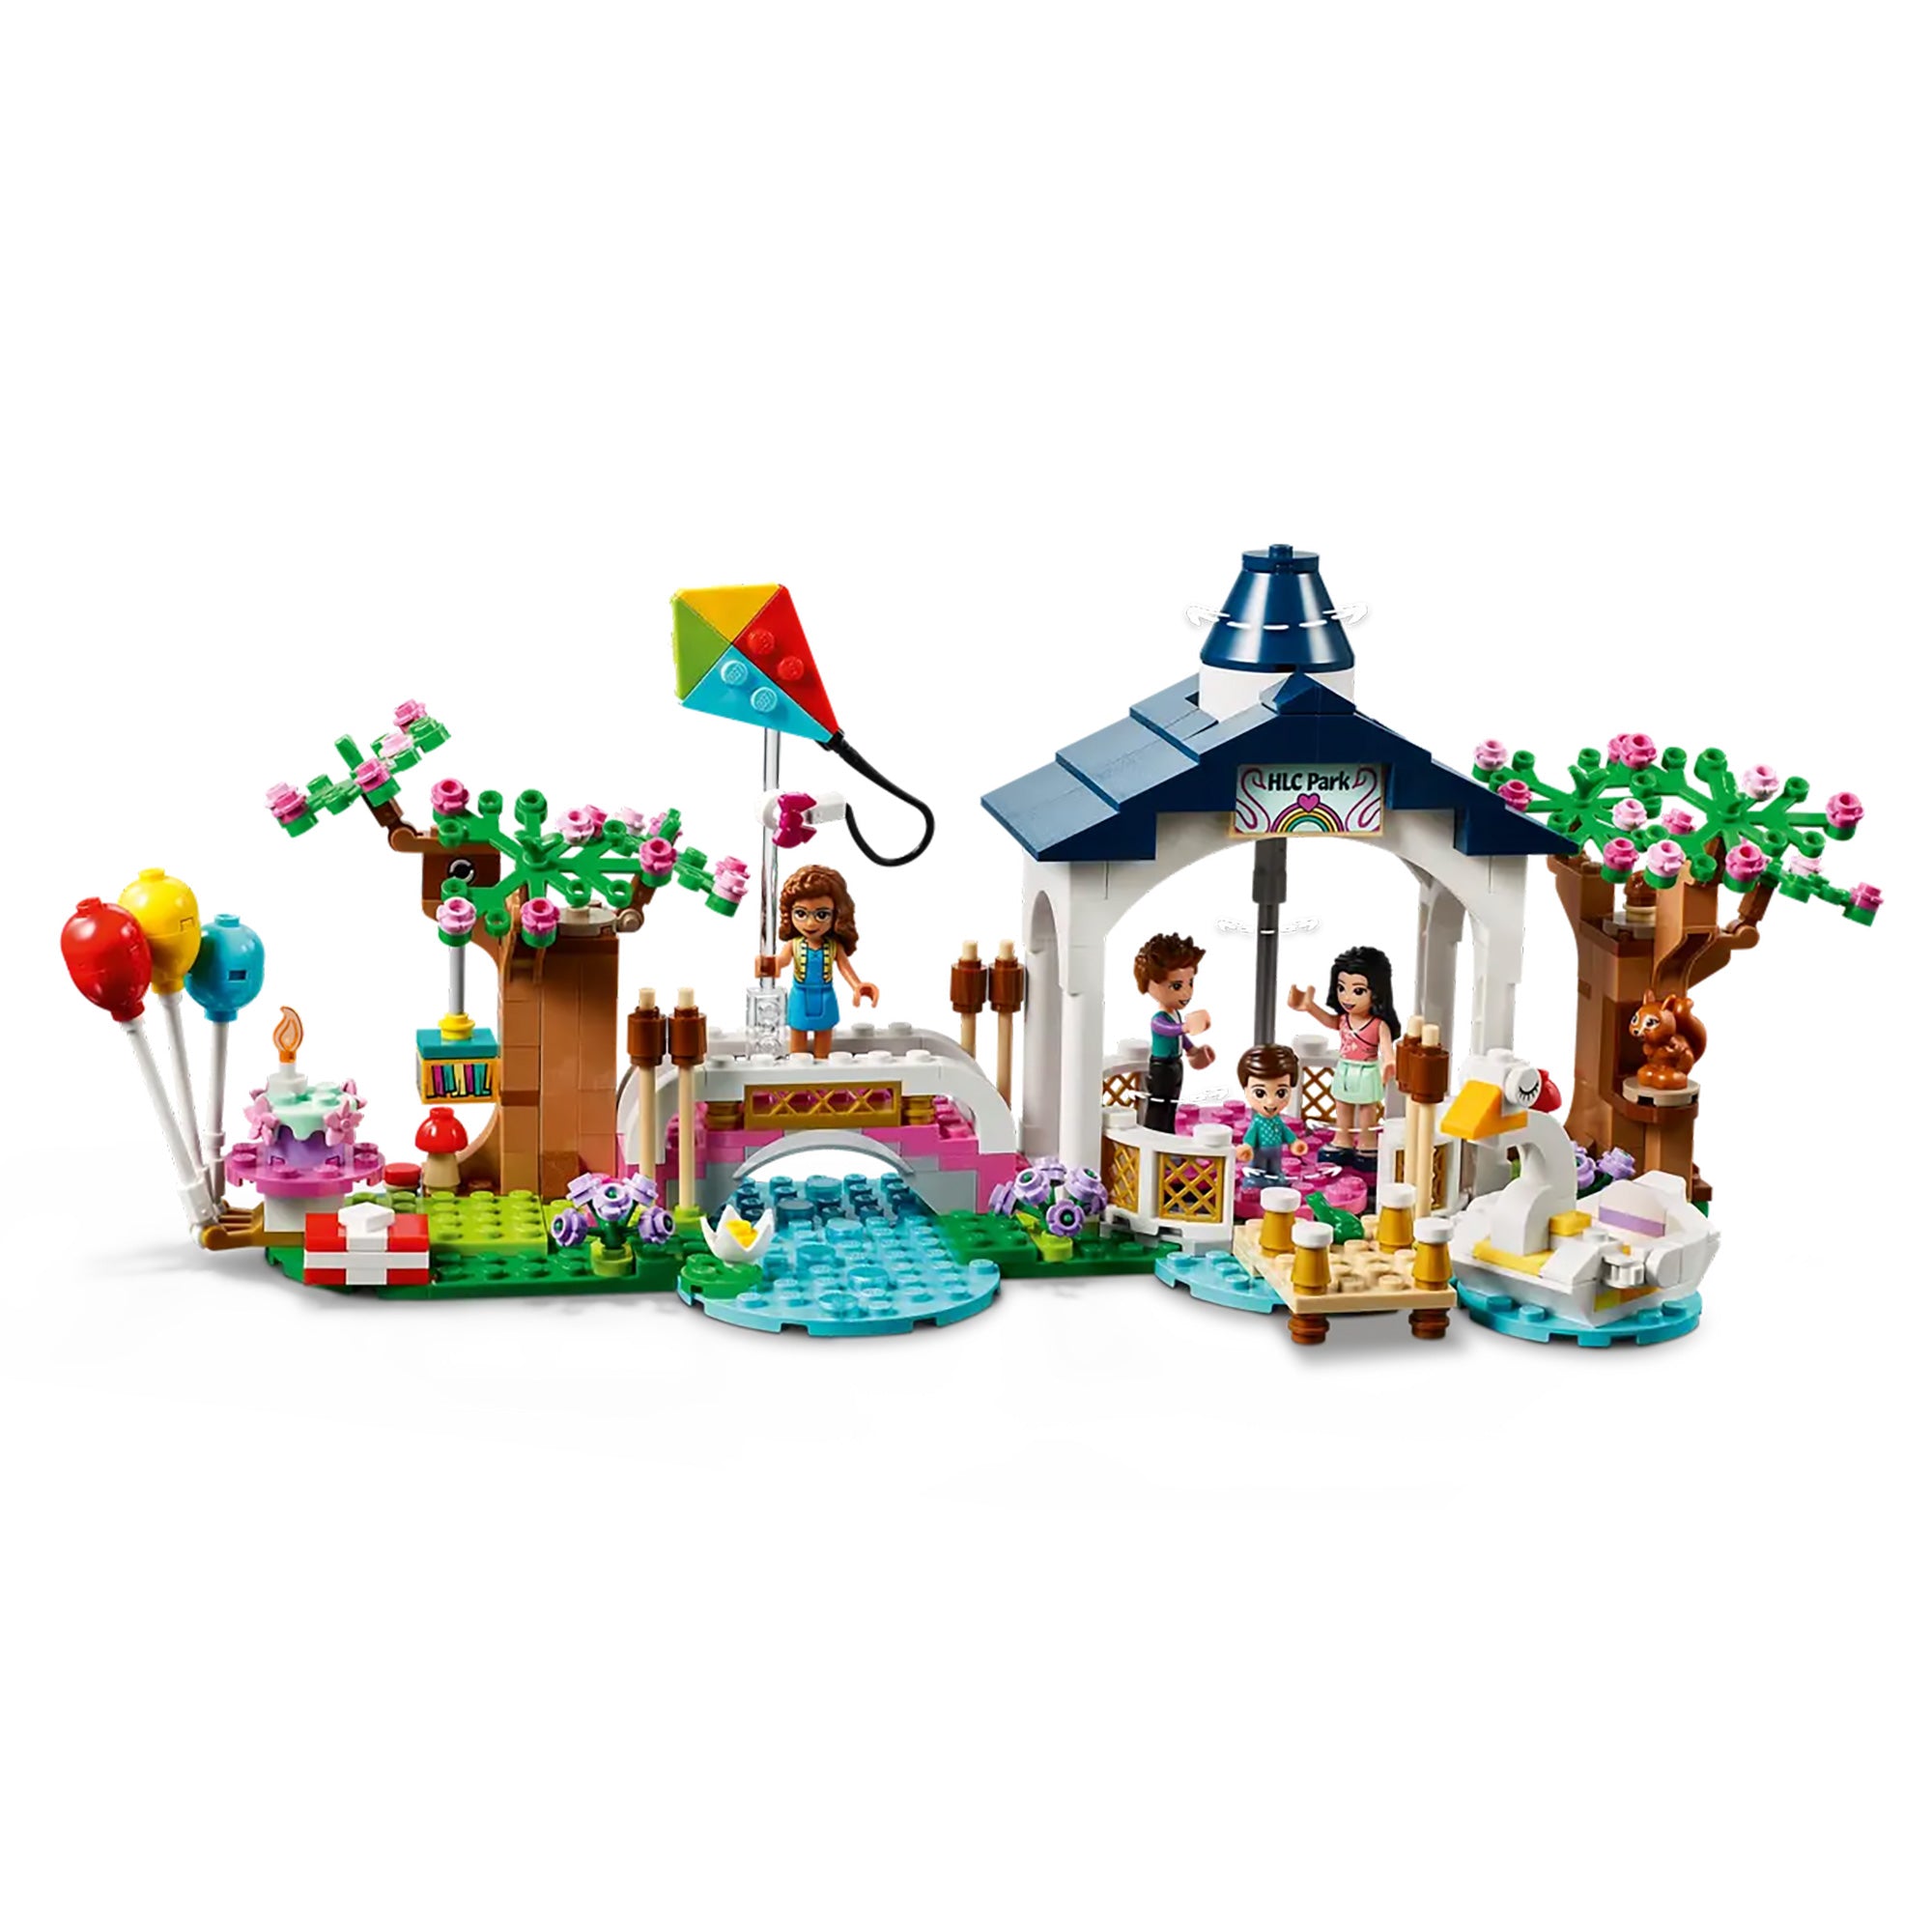 LEGO Friends Heartlake City Park, 41447, 432 Pieces | Party Expert